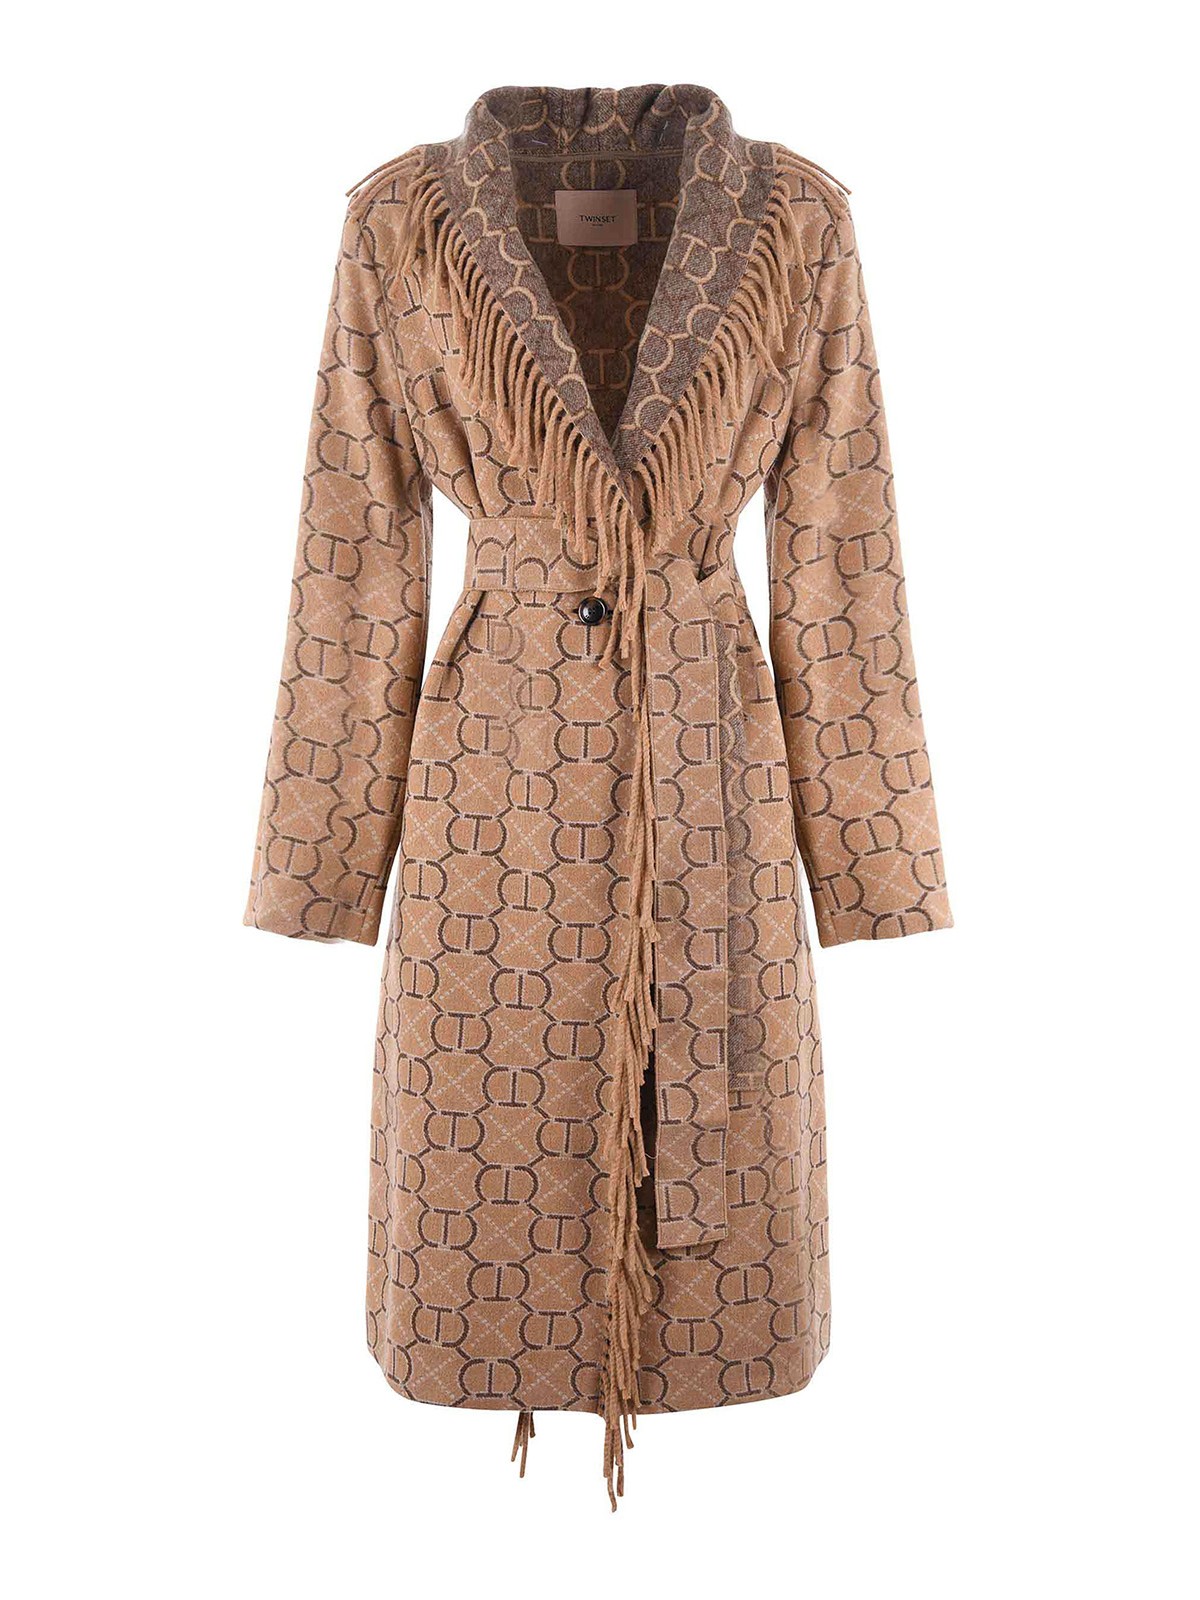 Dolce & Gabbana Women's Belted Jacquard Coat